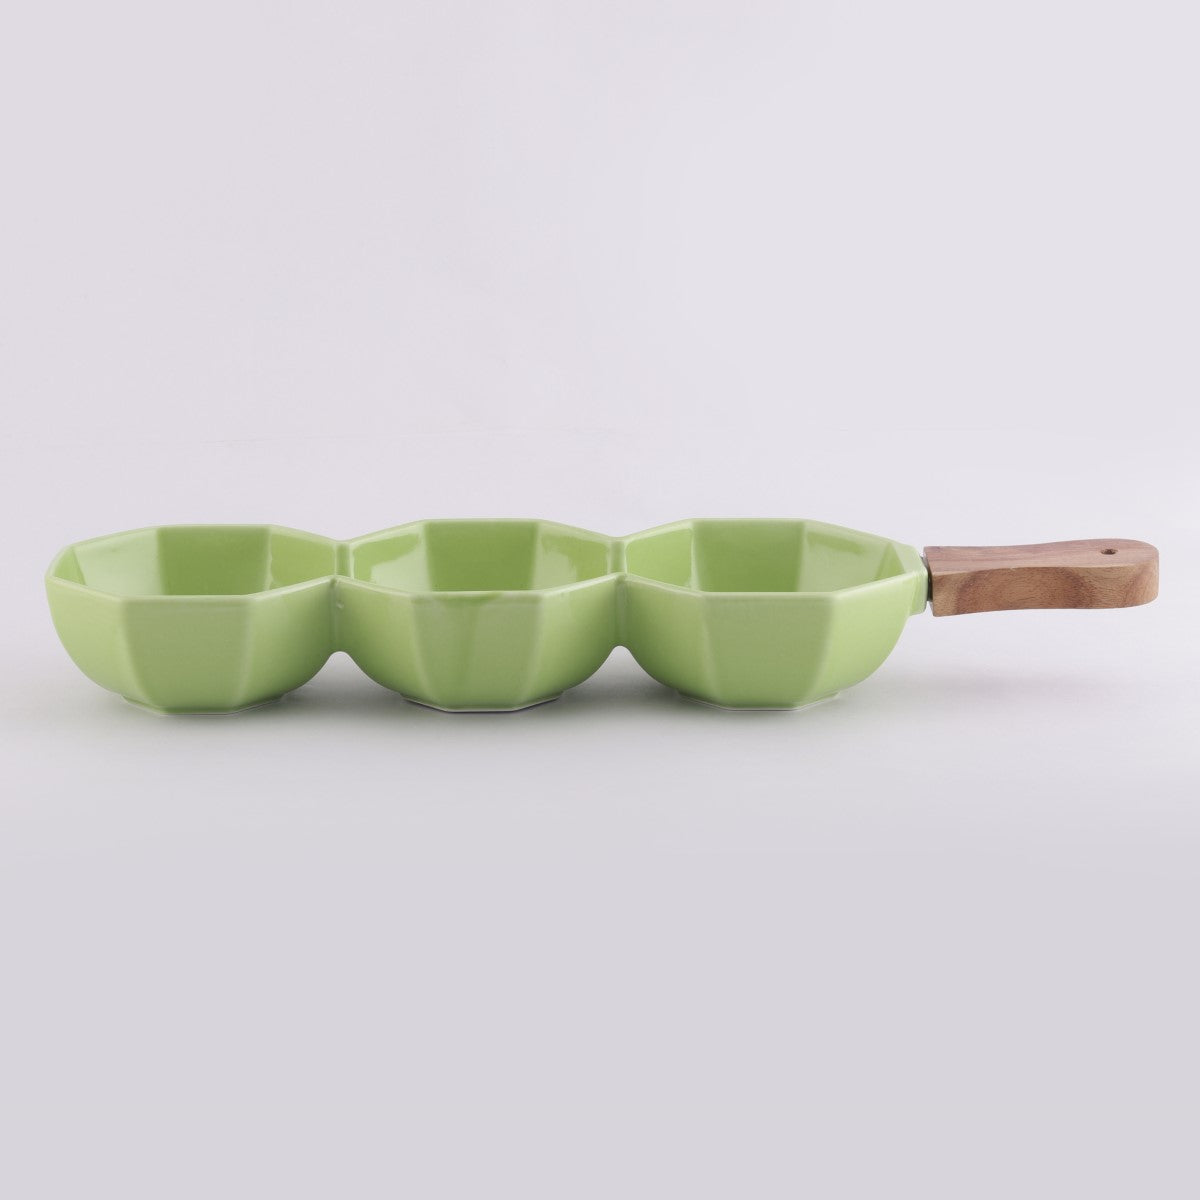 Octagonal Ceramic Serving Bowl Platter with Wooden Handle